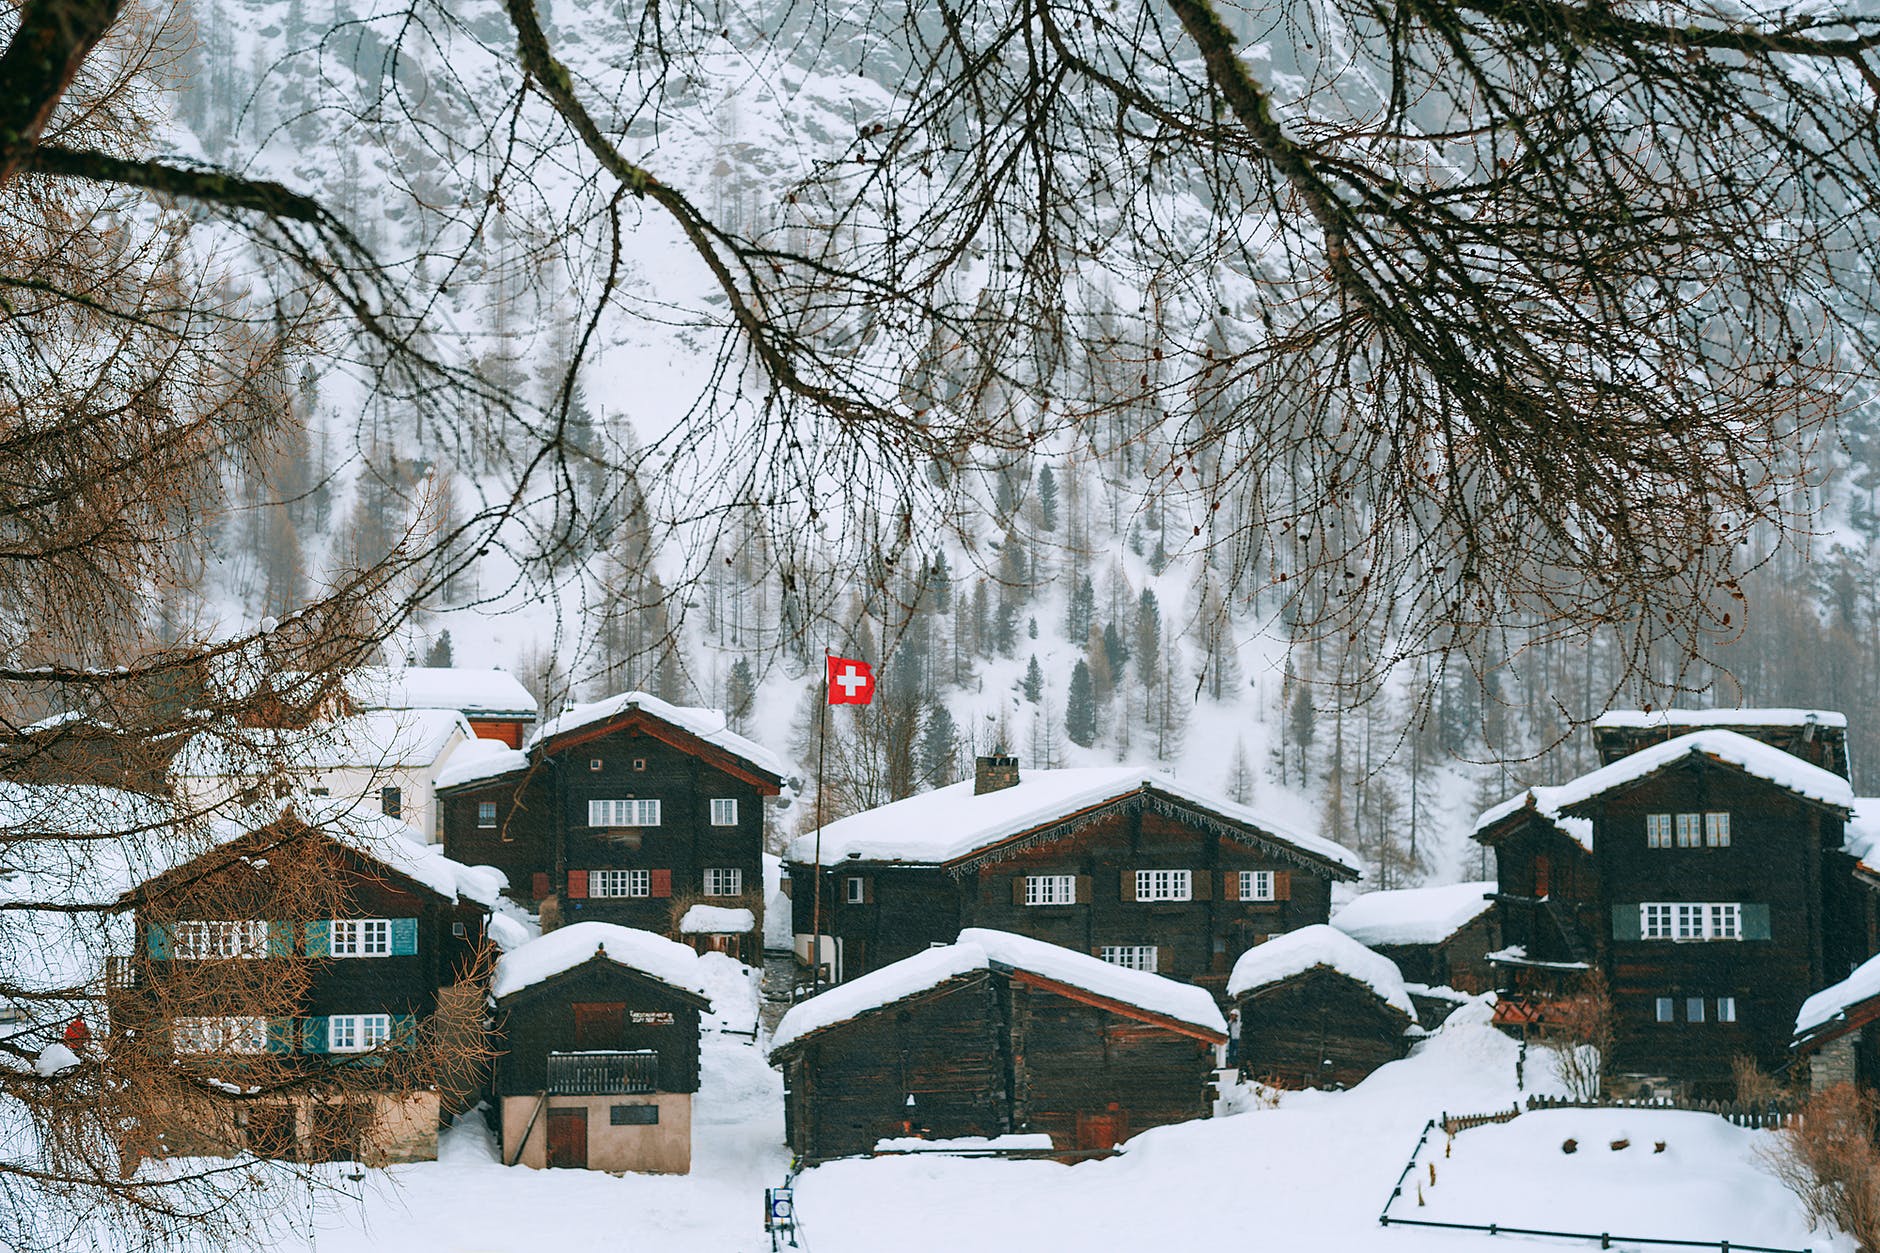 snowy village houses on hilly terrain